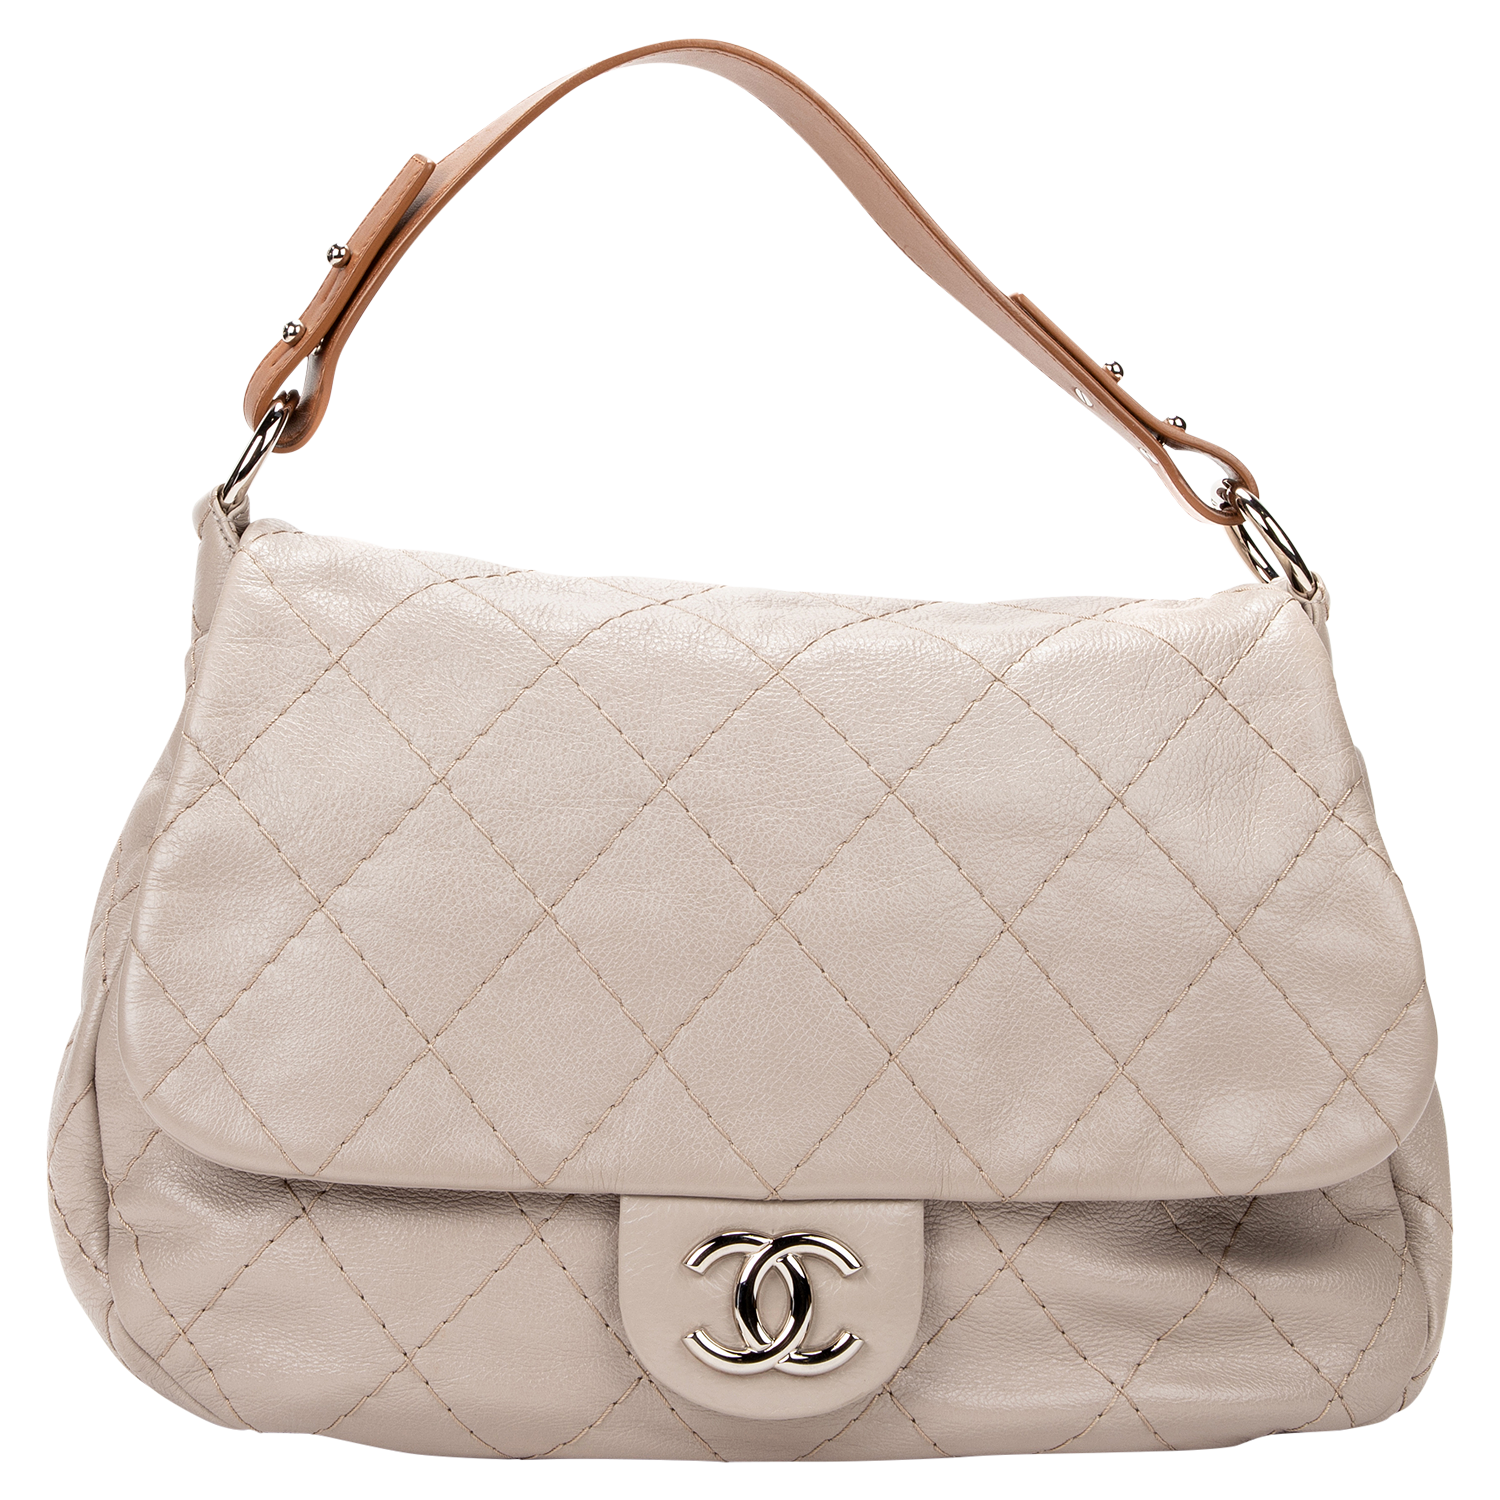 Chanel 2011 Grey Stitched Large Single Flap Bag - shop 